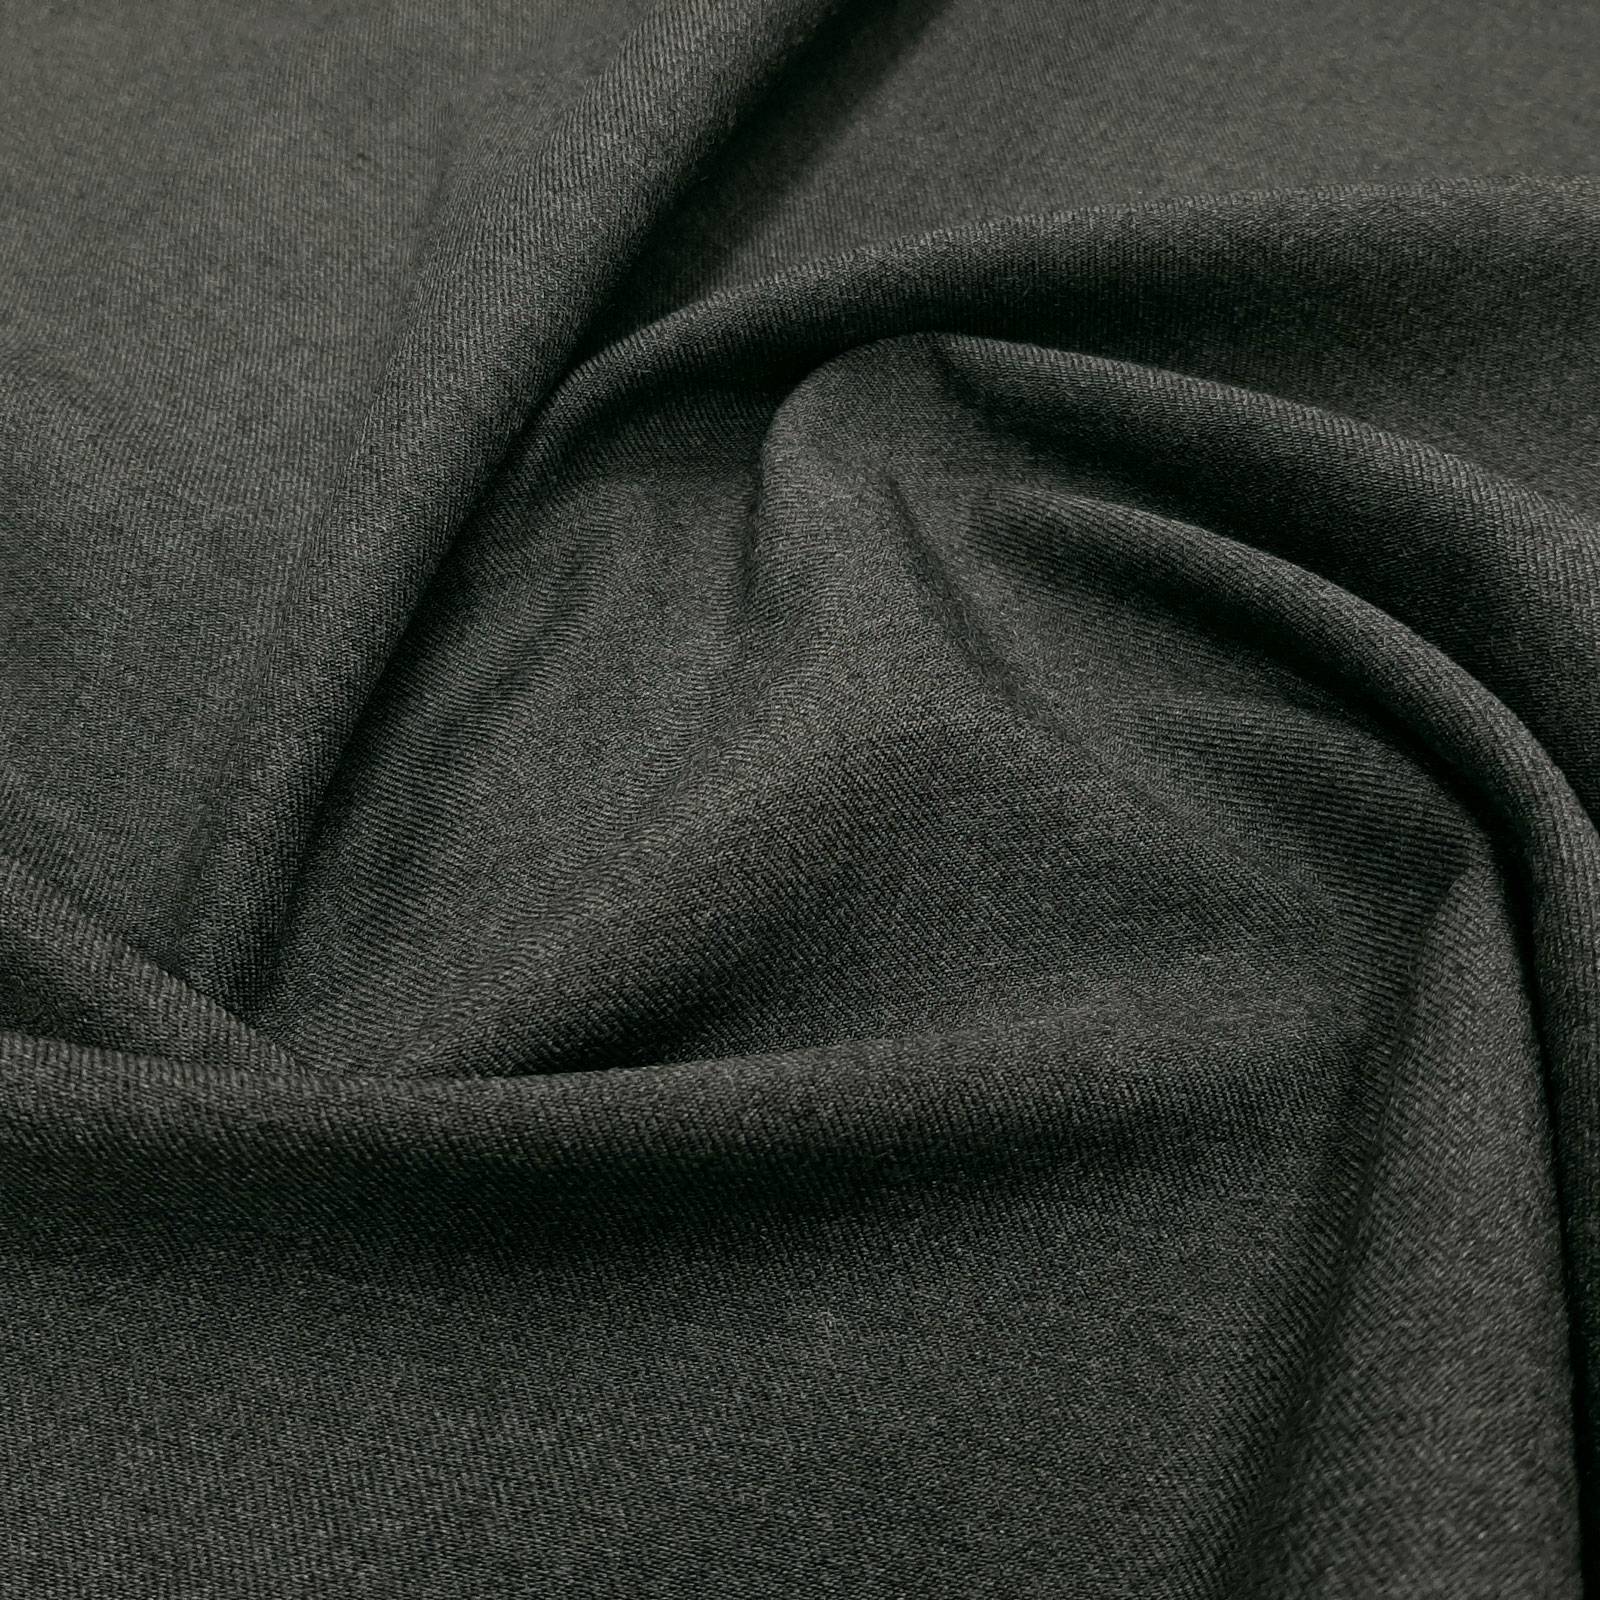 Zafer - Aramid wool upholstery fabric - flame retardant - Dark grey-melange